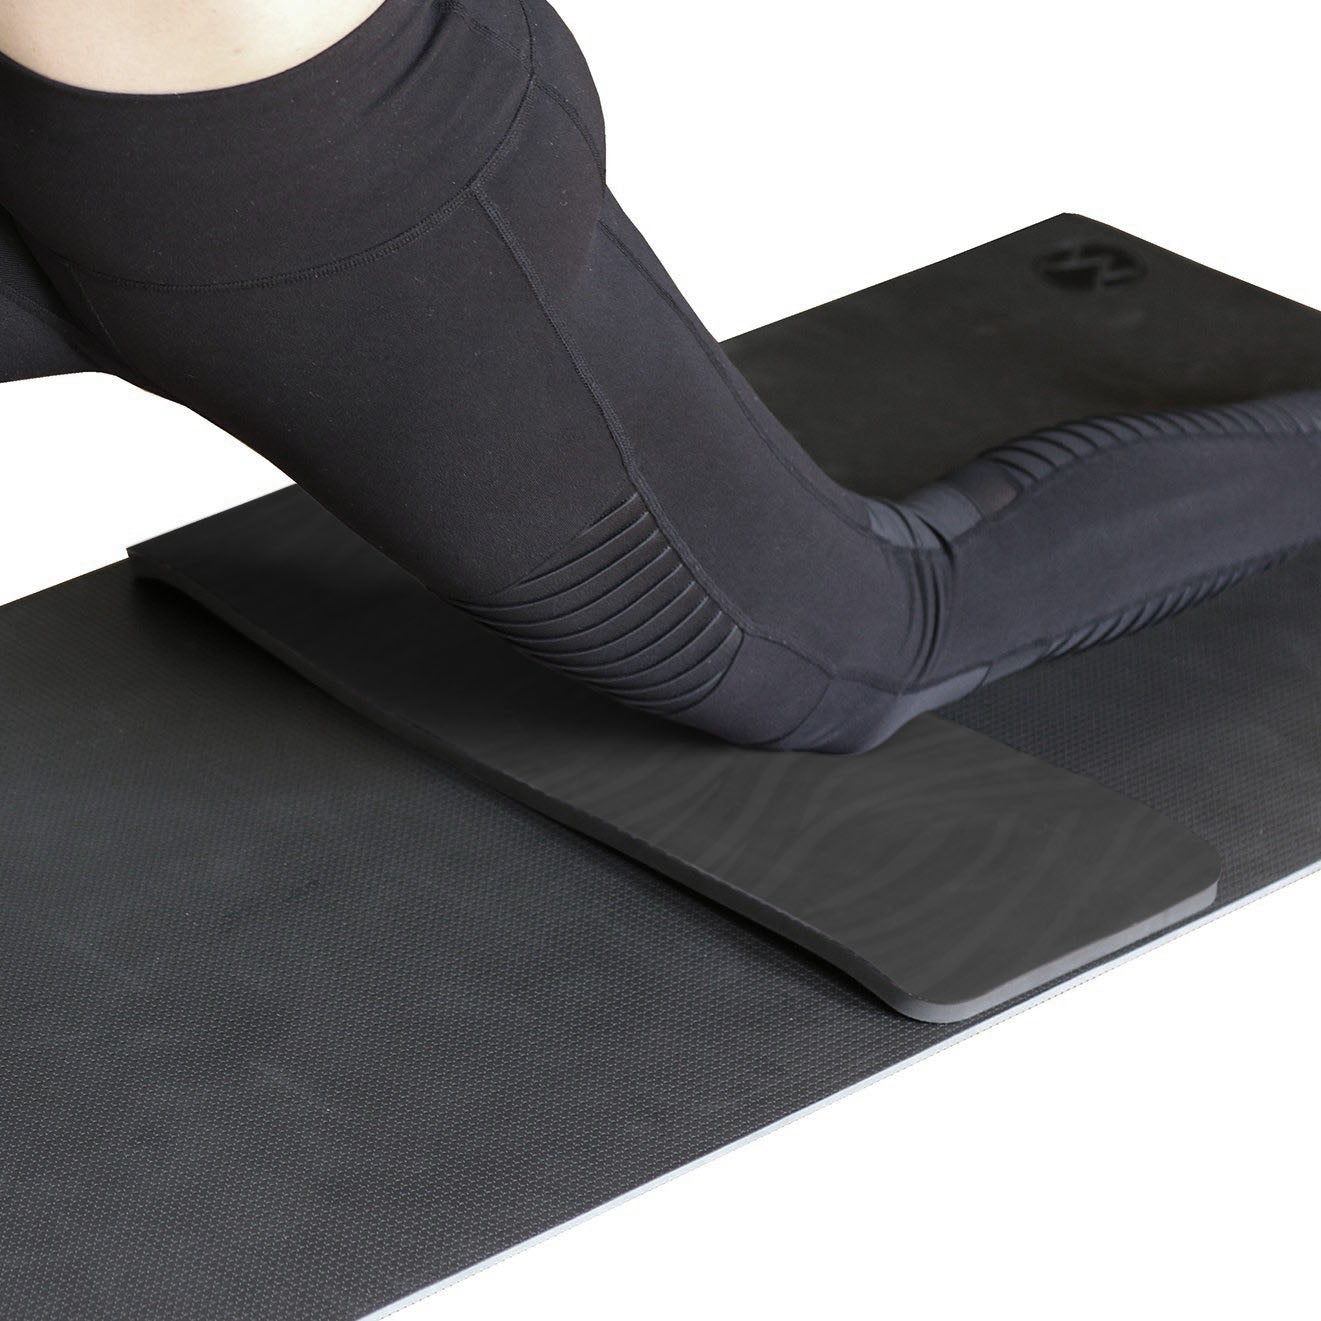 Buy IRIS Yoga Knee Pad - Kneeling Support for Yoga, Eco-Friendly